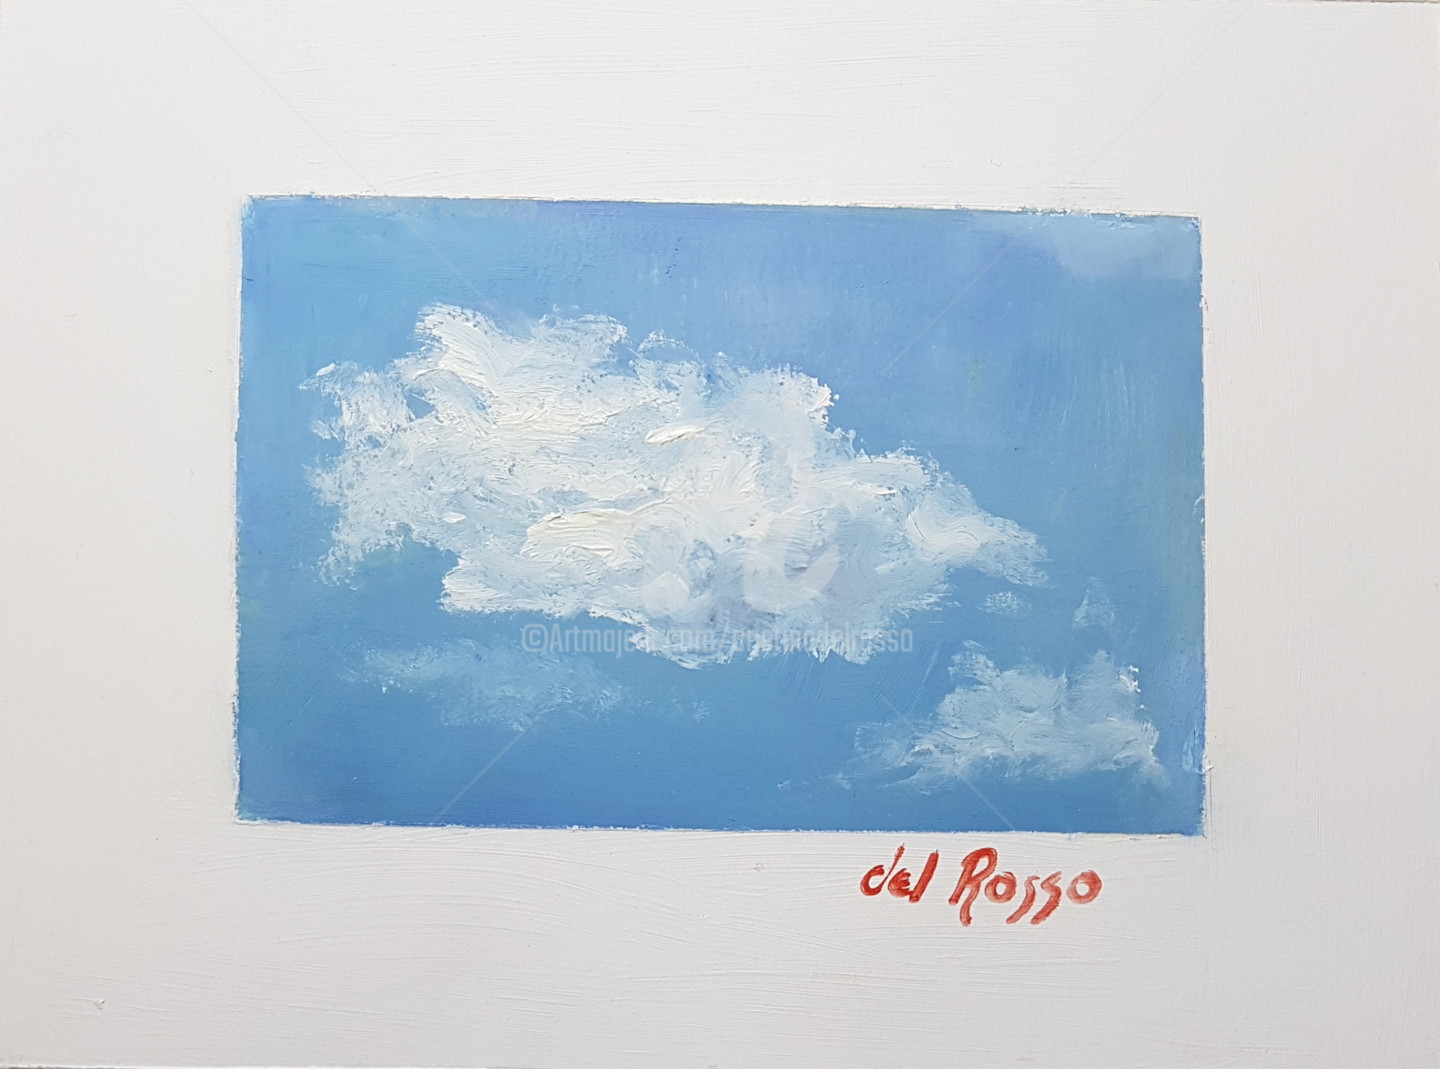 Cristina Del Rosso - Atrapamos a una nube (We caught a cloud)